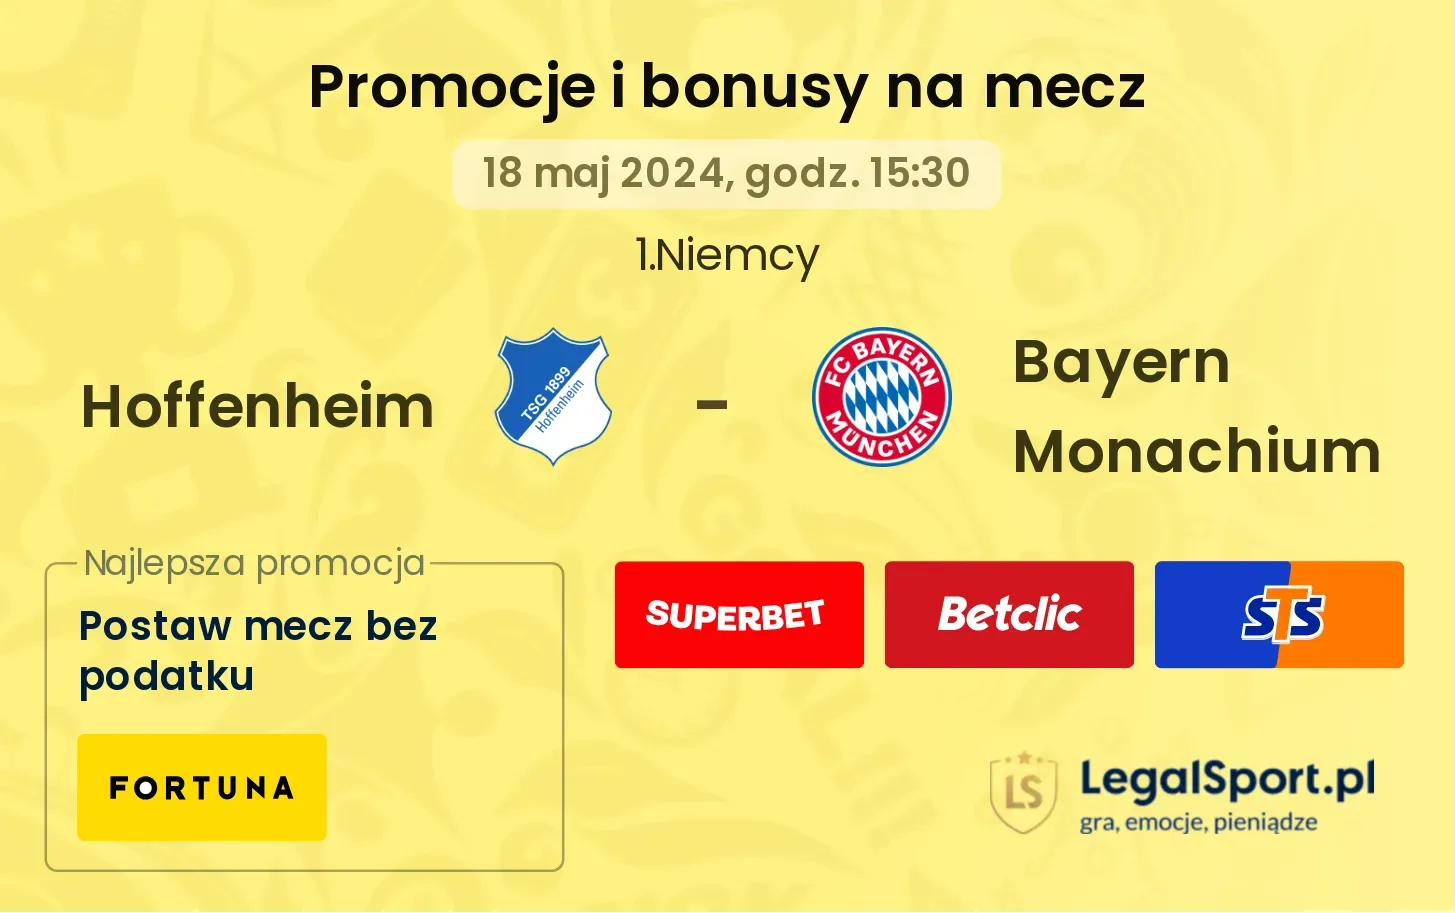 Hoffenheim - Bayern Monachium bonusy i promocje (18.05, 15:30)